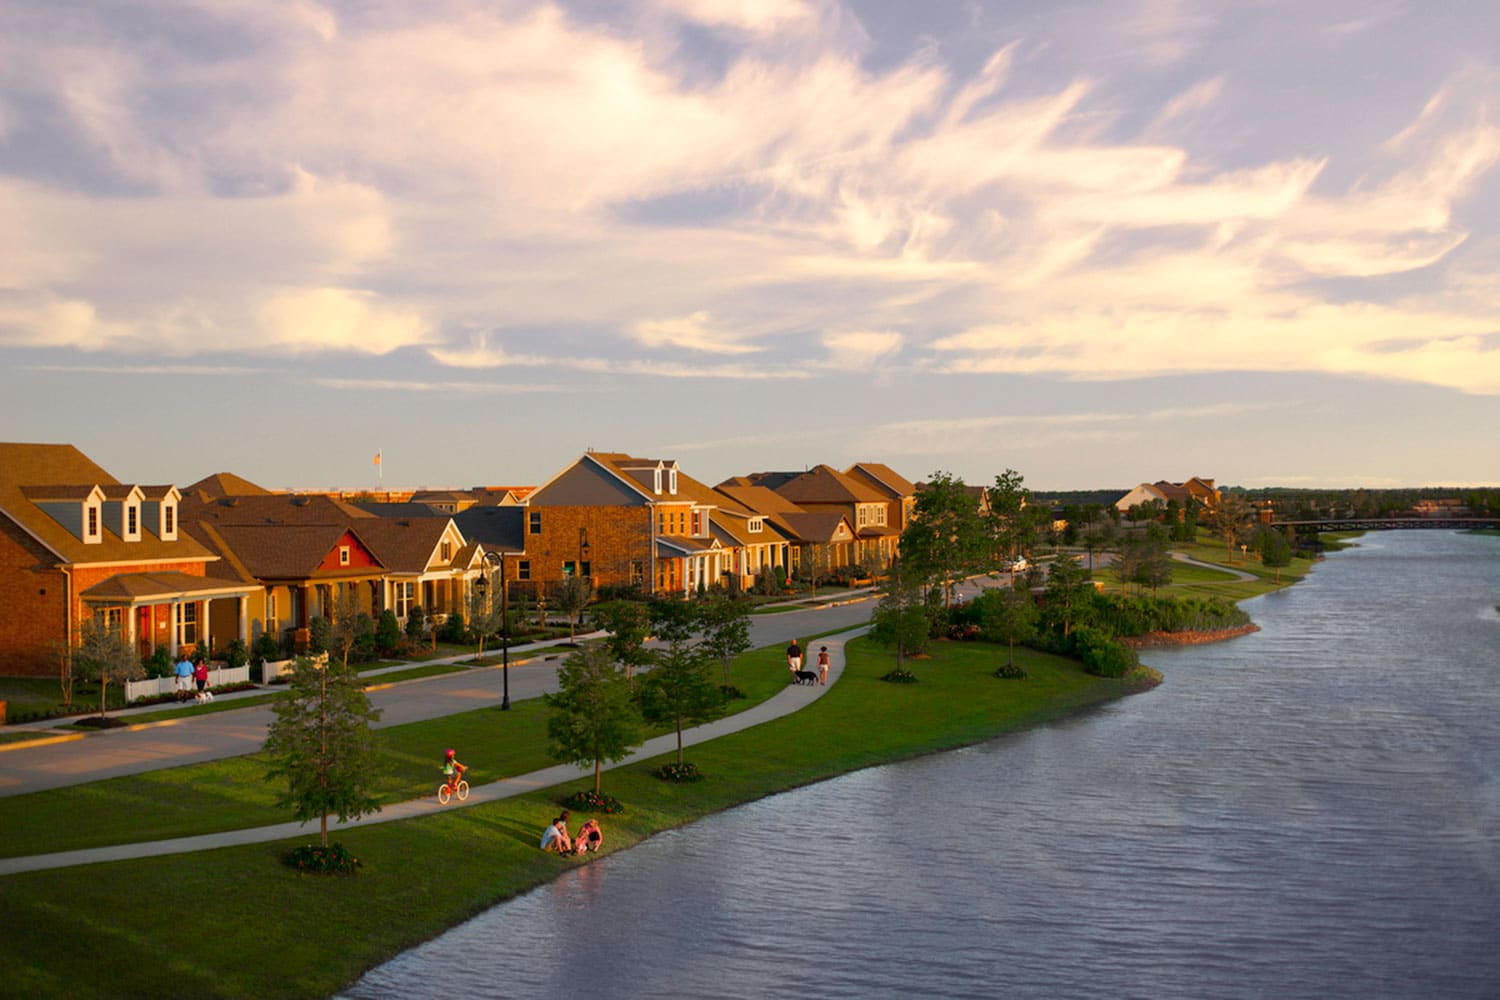 Bridgeland aerial view of homes by water